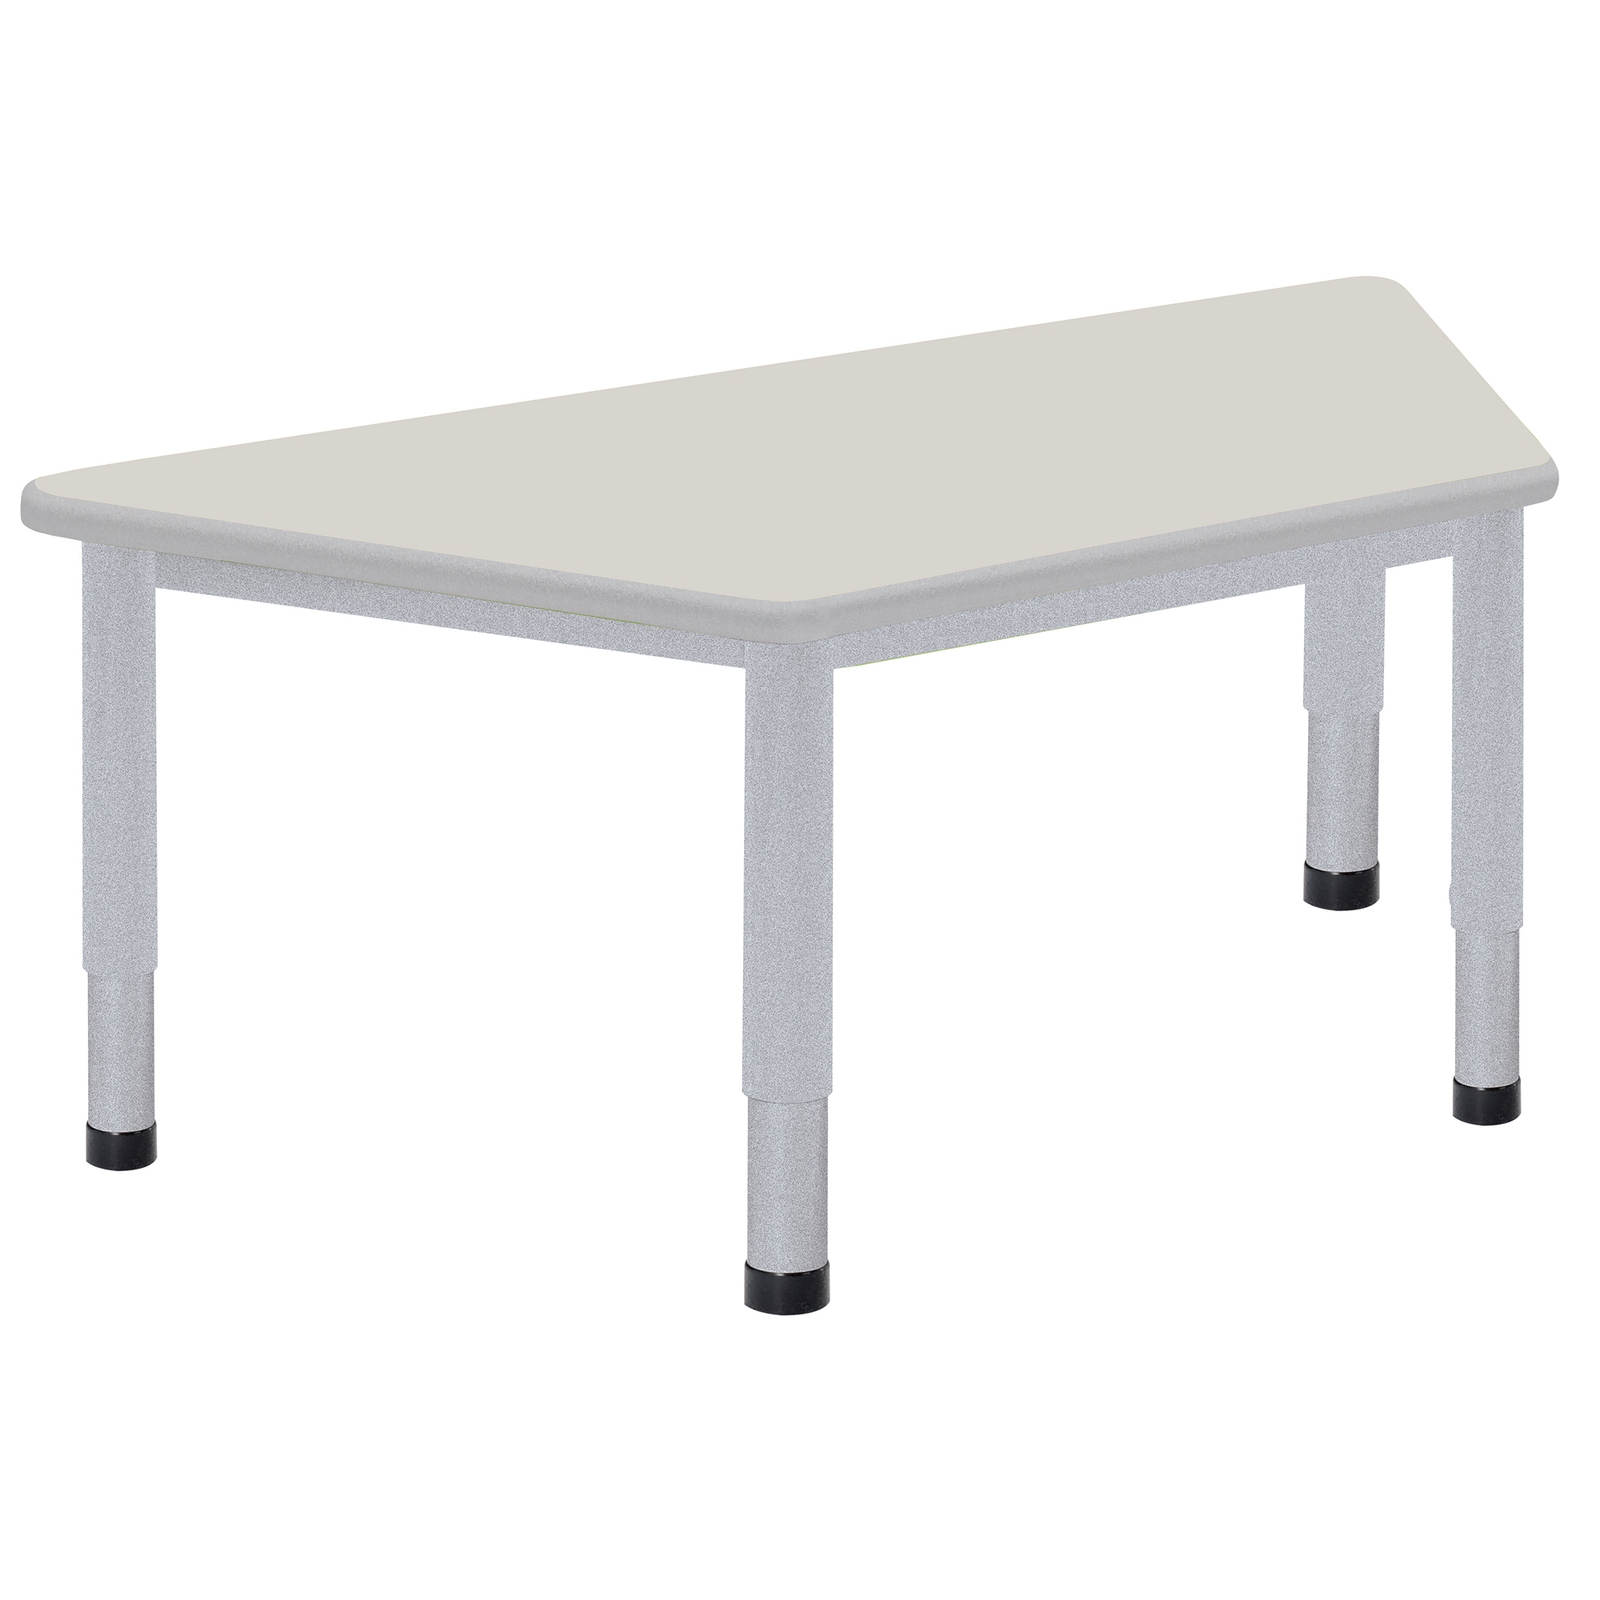 Harlequin Grey Trapezoidal Table - 120 x 60cm - Each